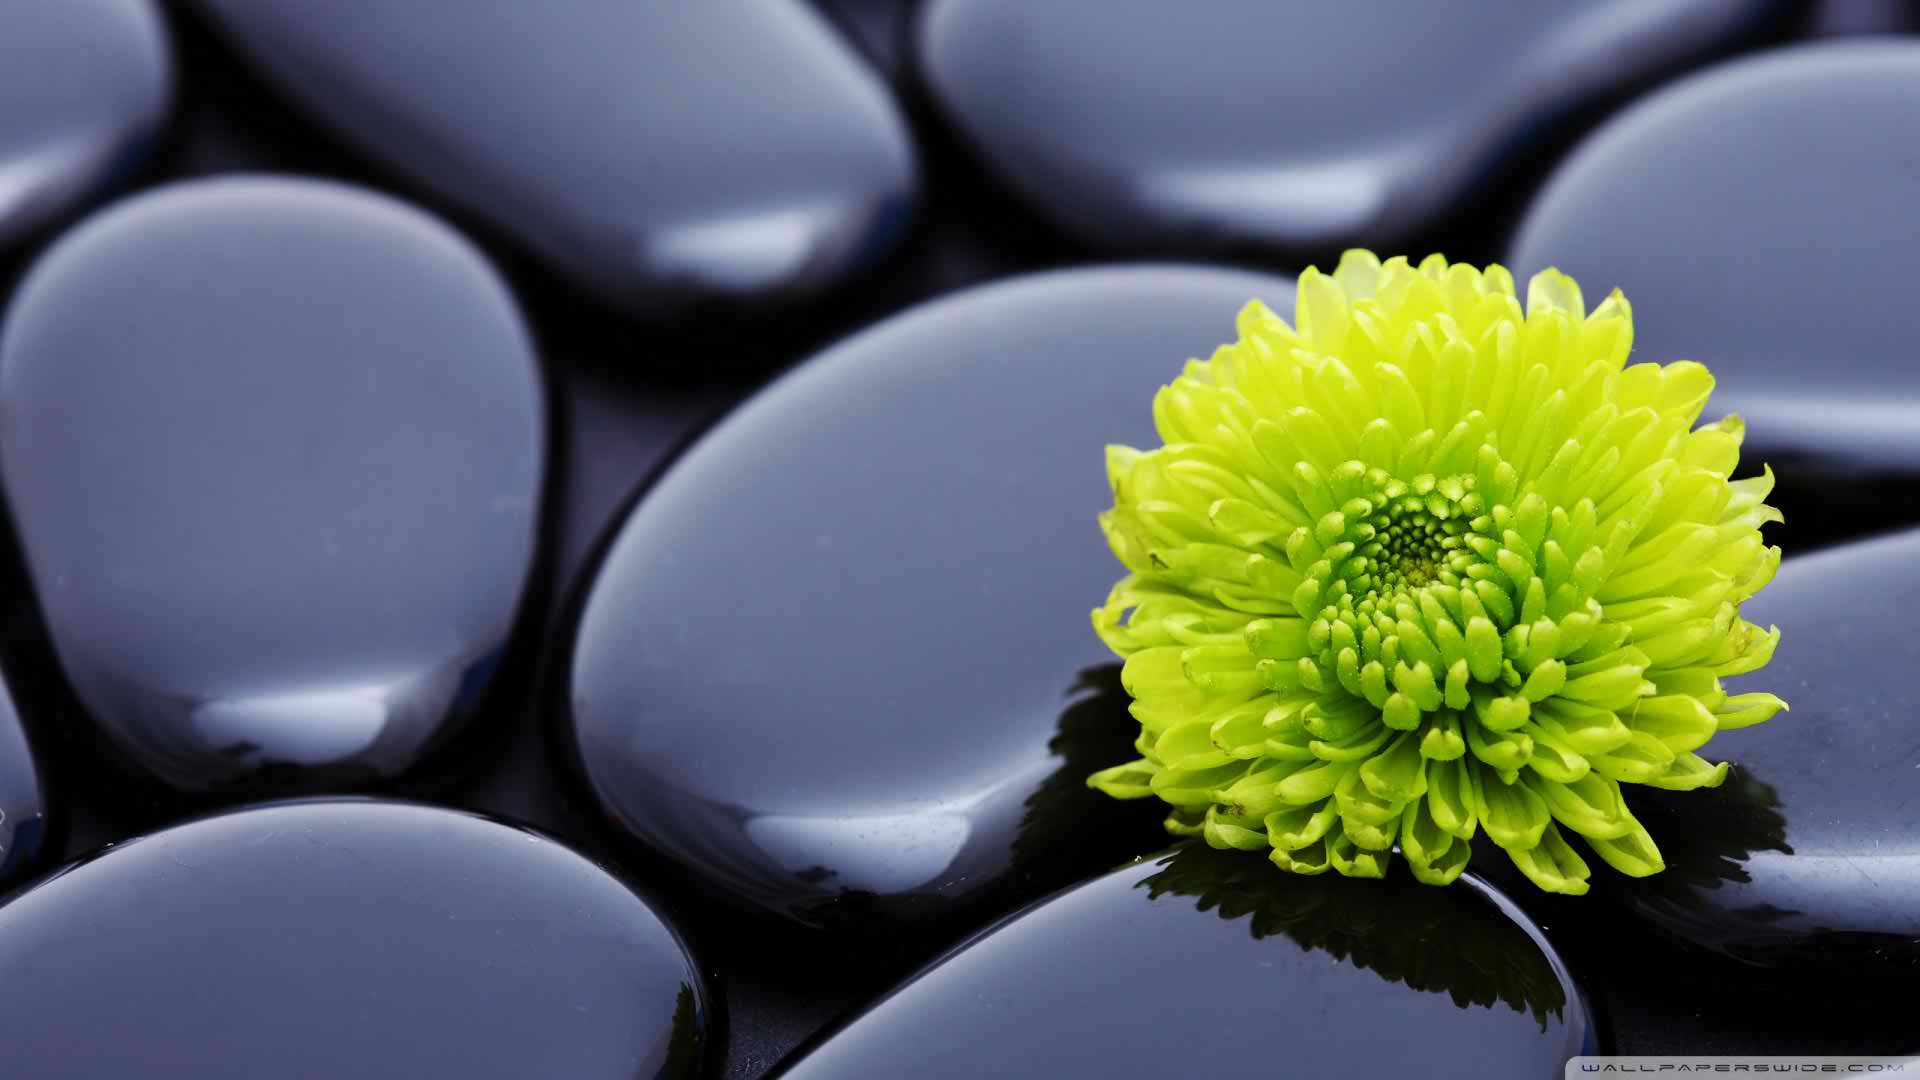 Natural Zen Image - Hd Wallpapers 1080p Widescreen Flowers - 1920x1080  Wallpaper 